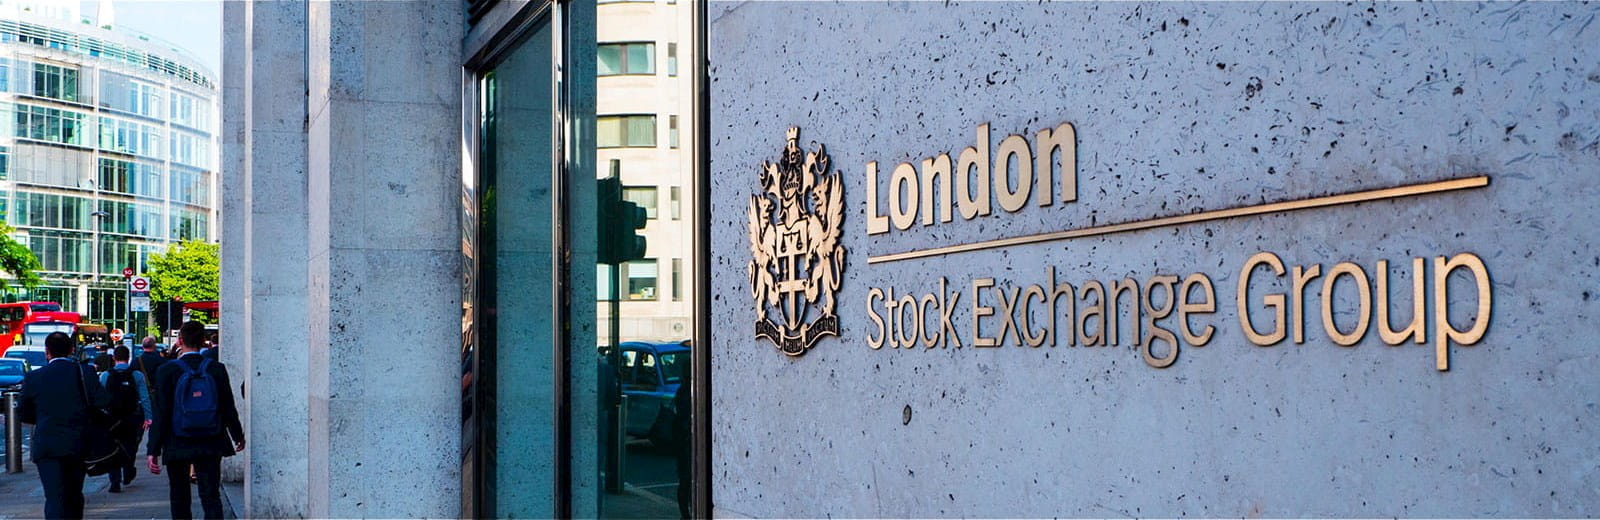 London Stock Exchange Group building entrance ICAEW Corporate Financier news